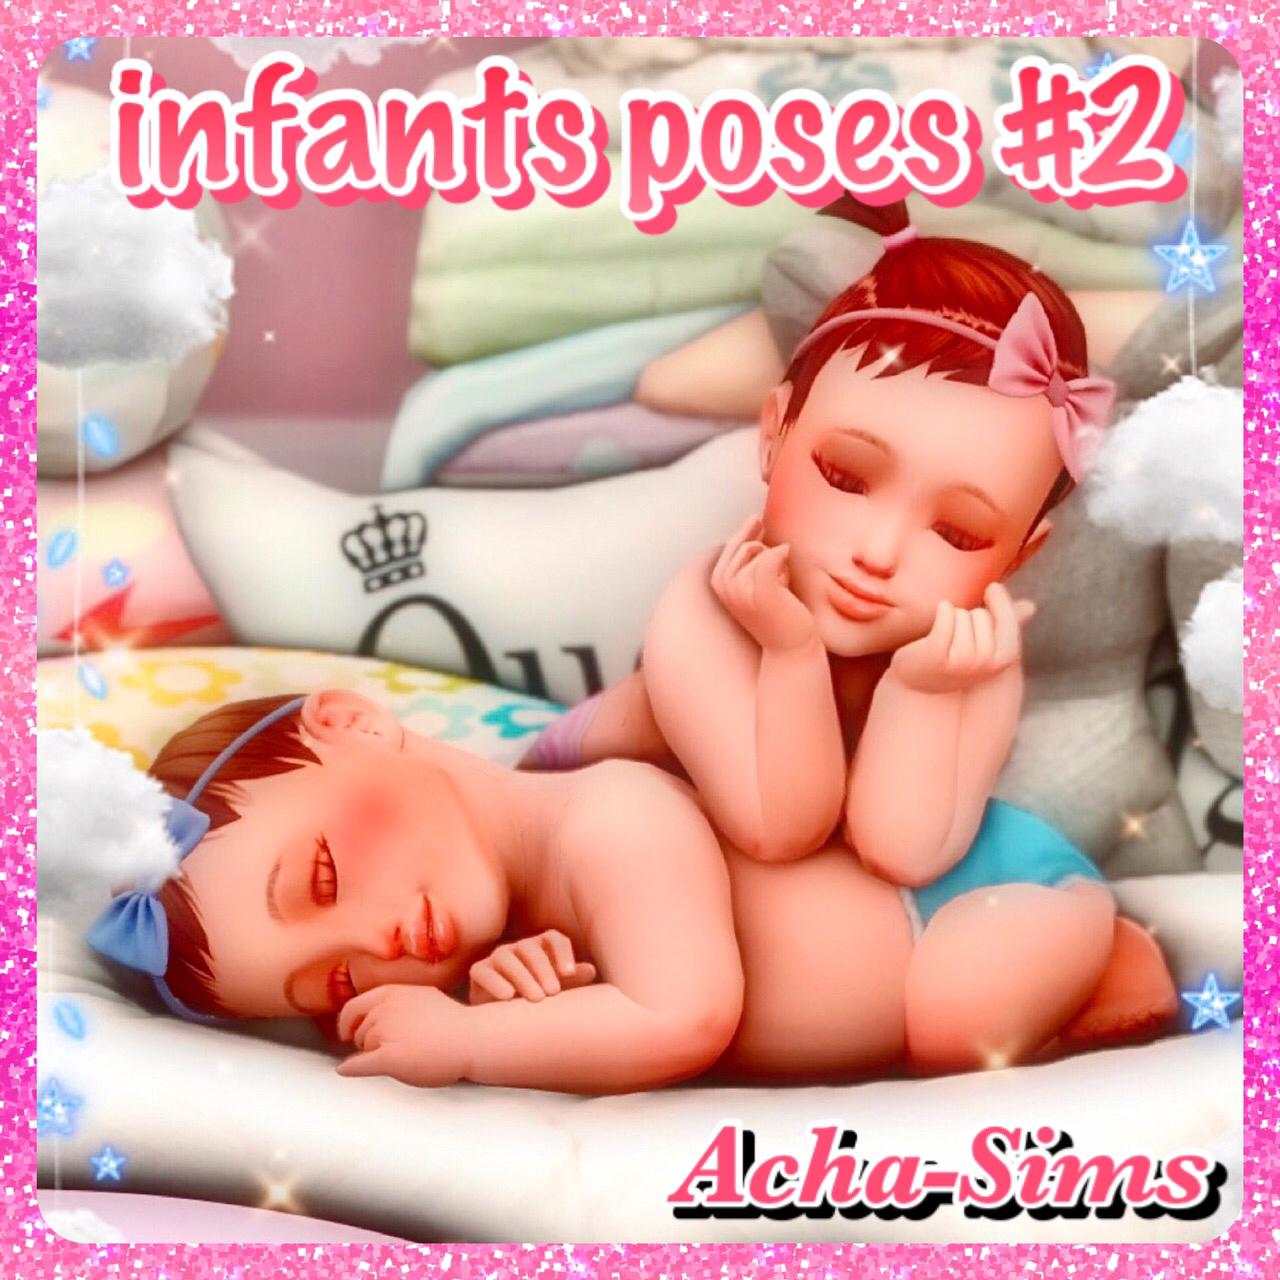 Acha infants poses #2 (pair) project avatar